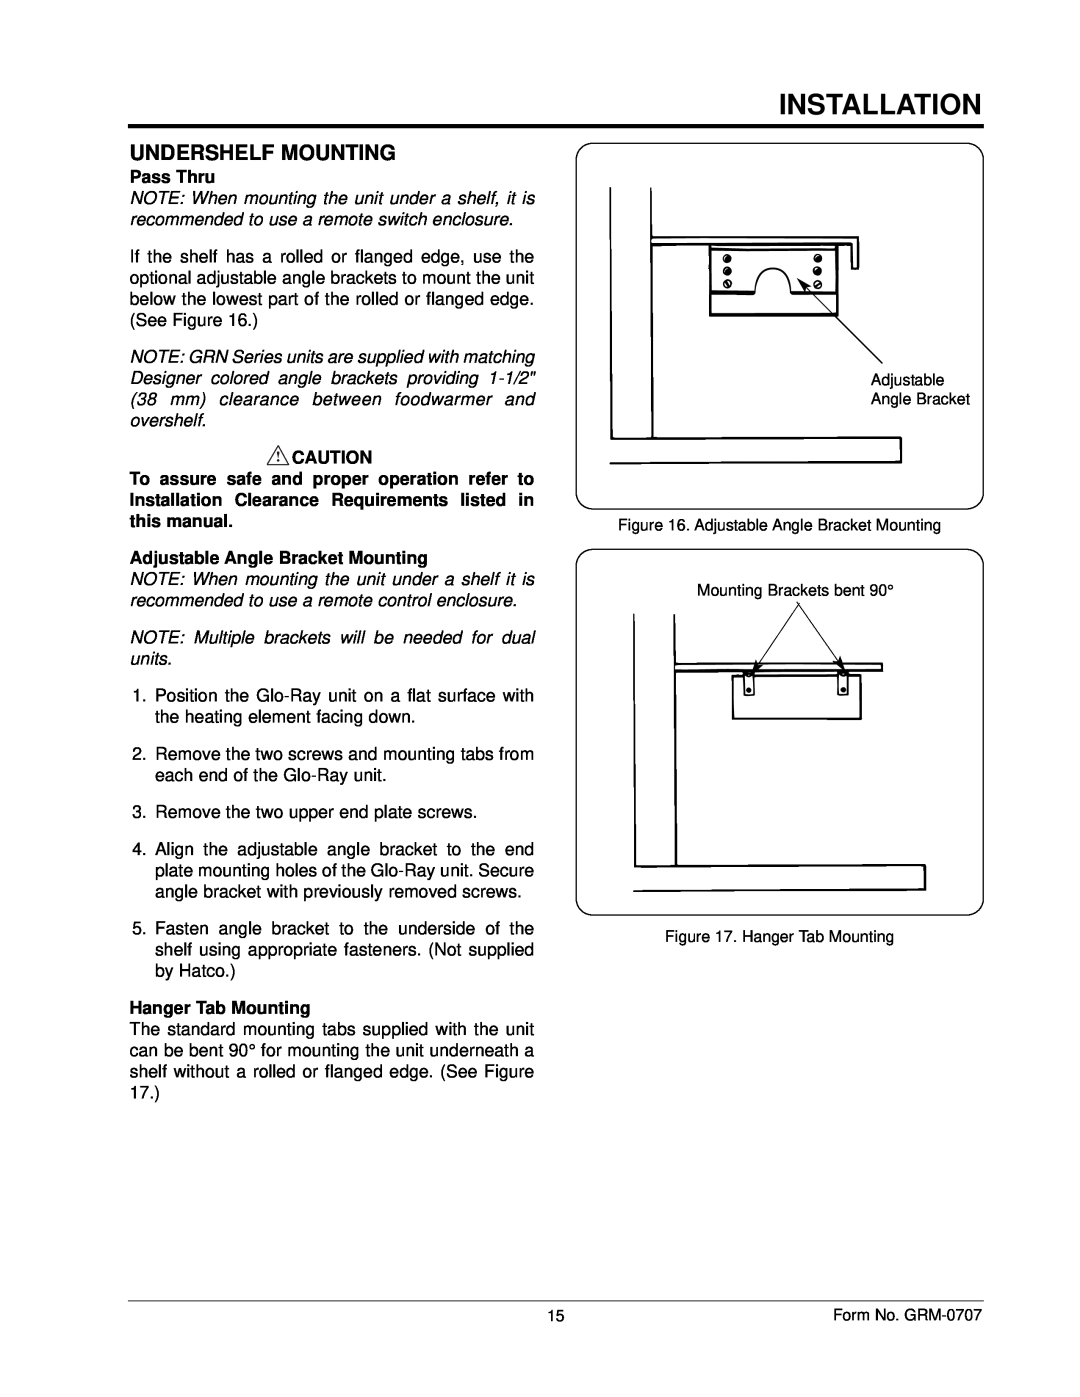 Hatco GRH, GRAL, GRAHL, GRNH manual Undershelf Mounting, Installation 